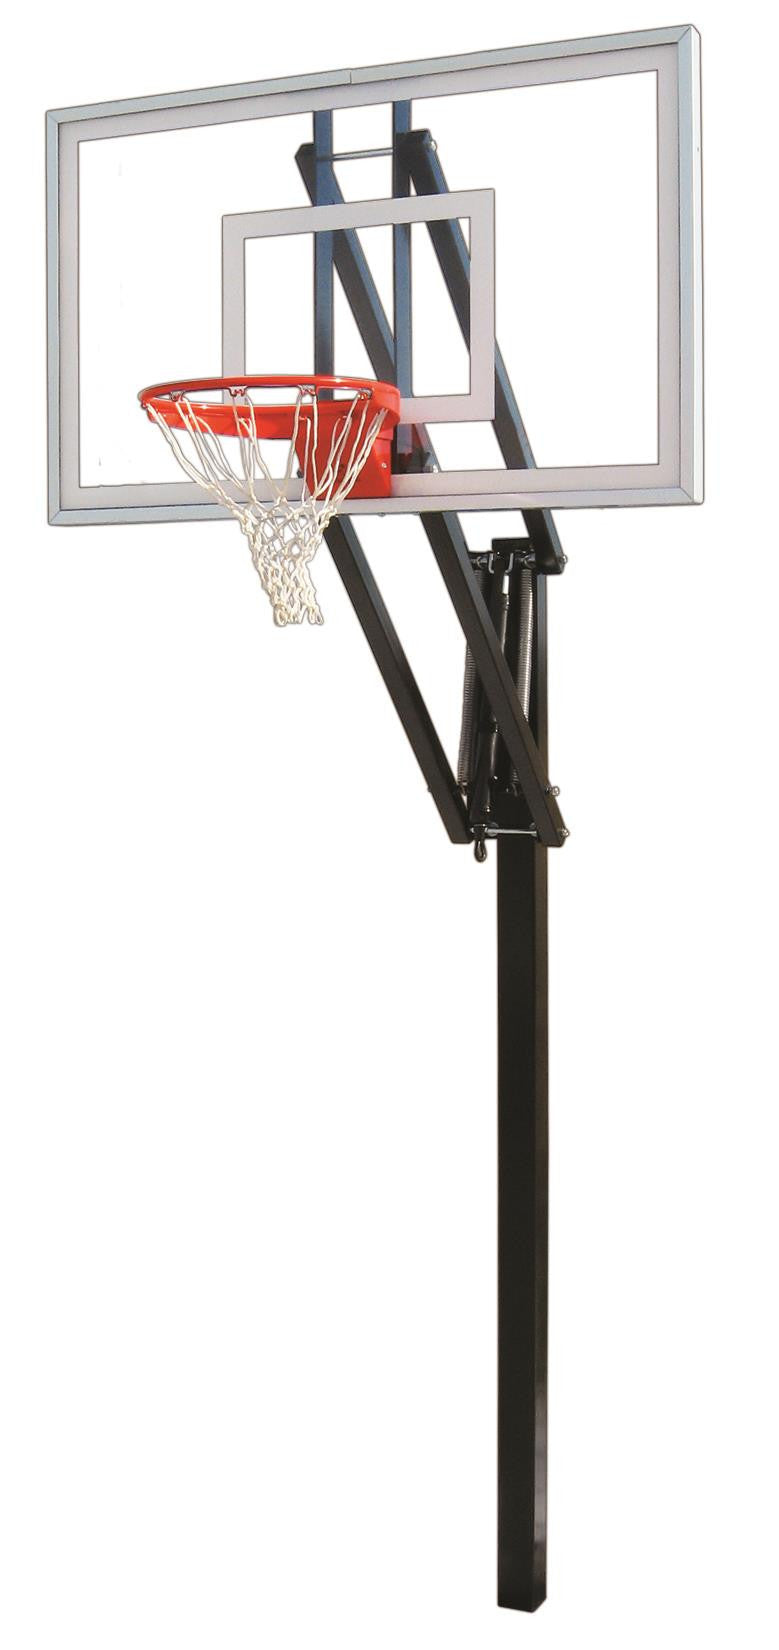 Premium Vector  Basketball set. sport equipment and accessories